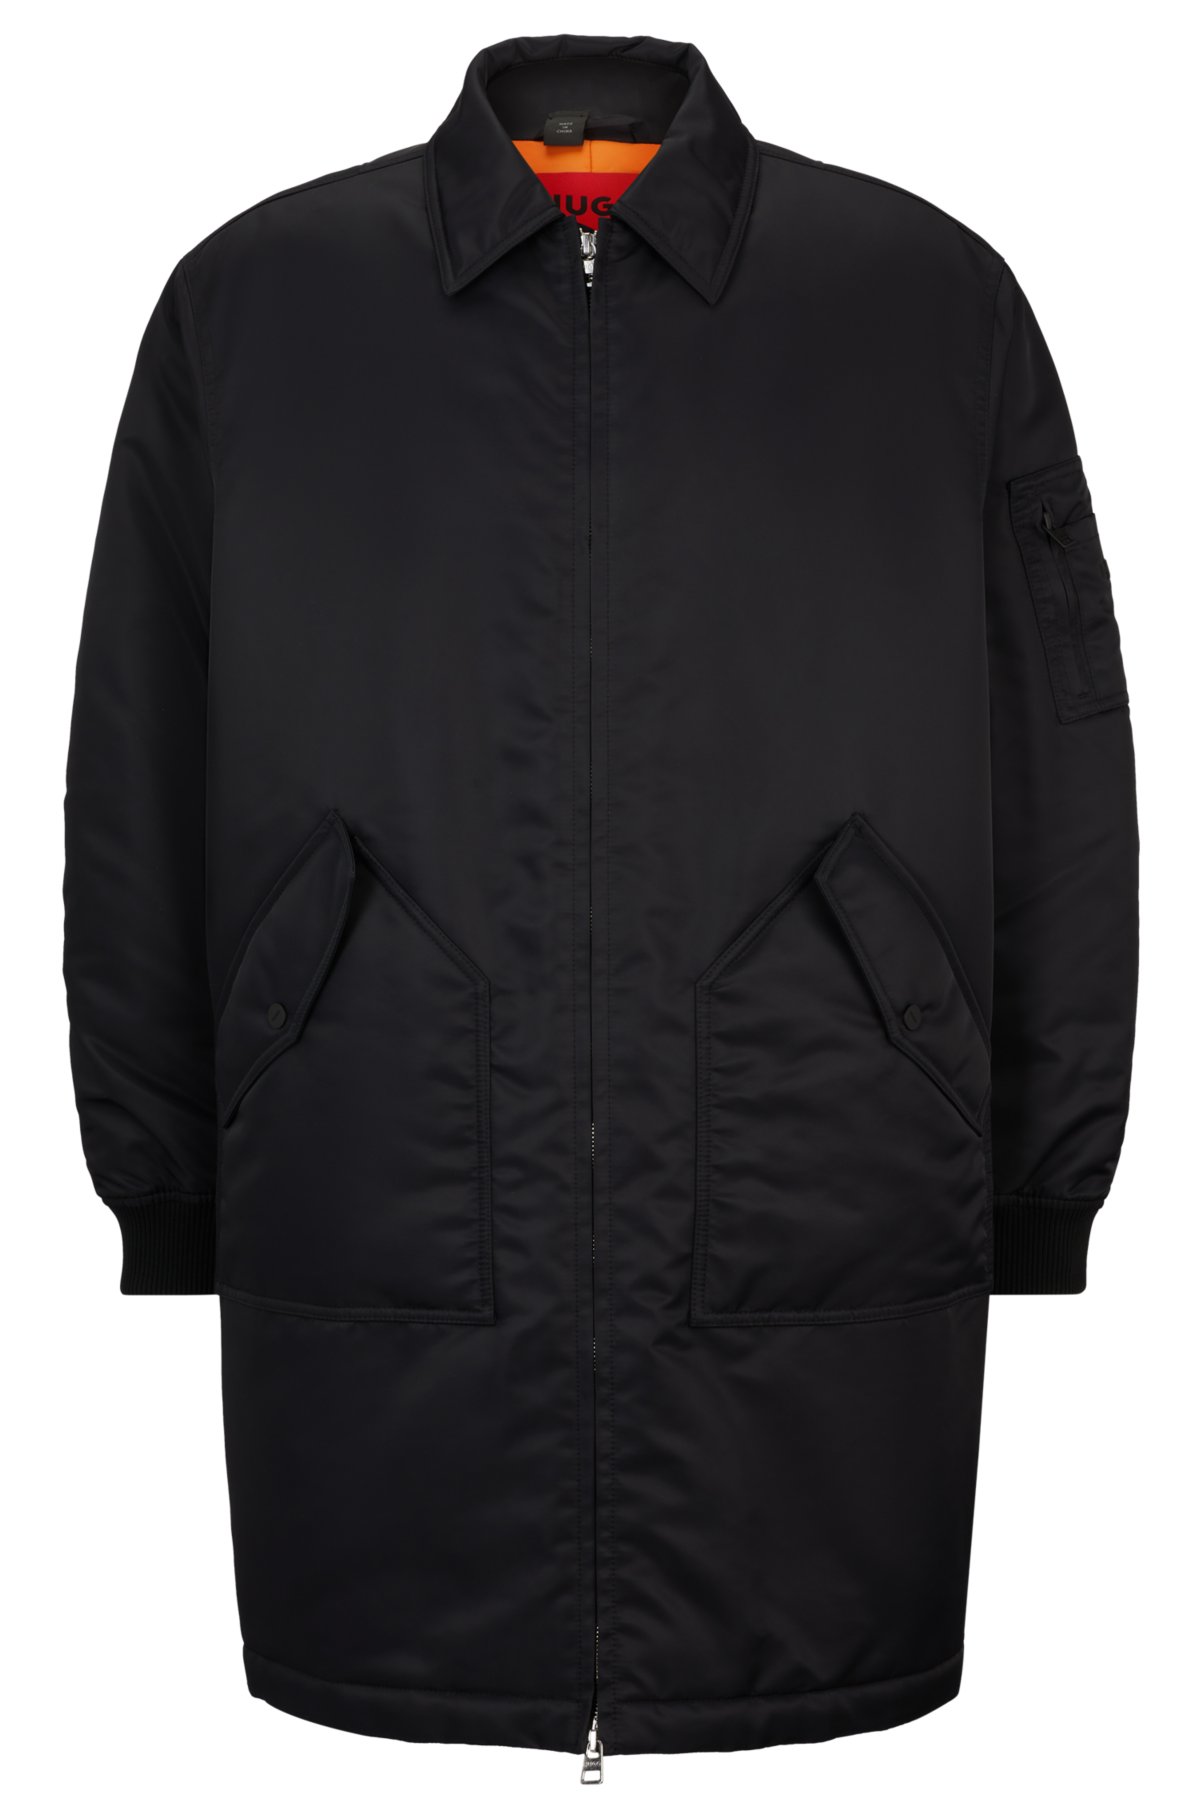 Water-repellent coat with branded sleeve pocket, Black